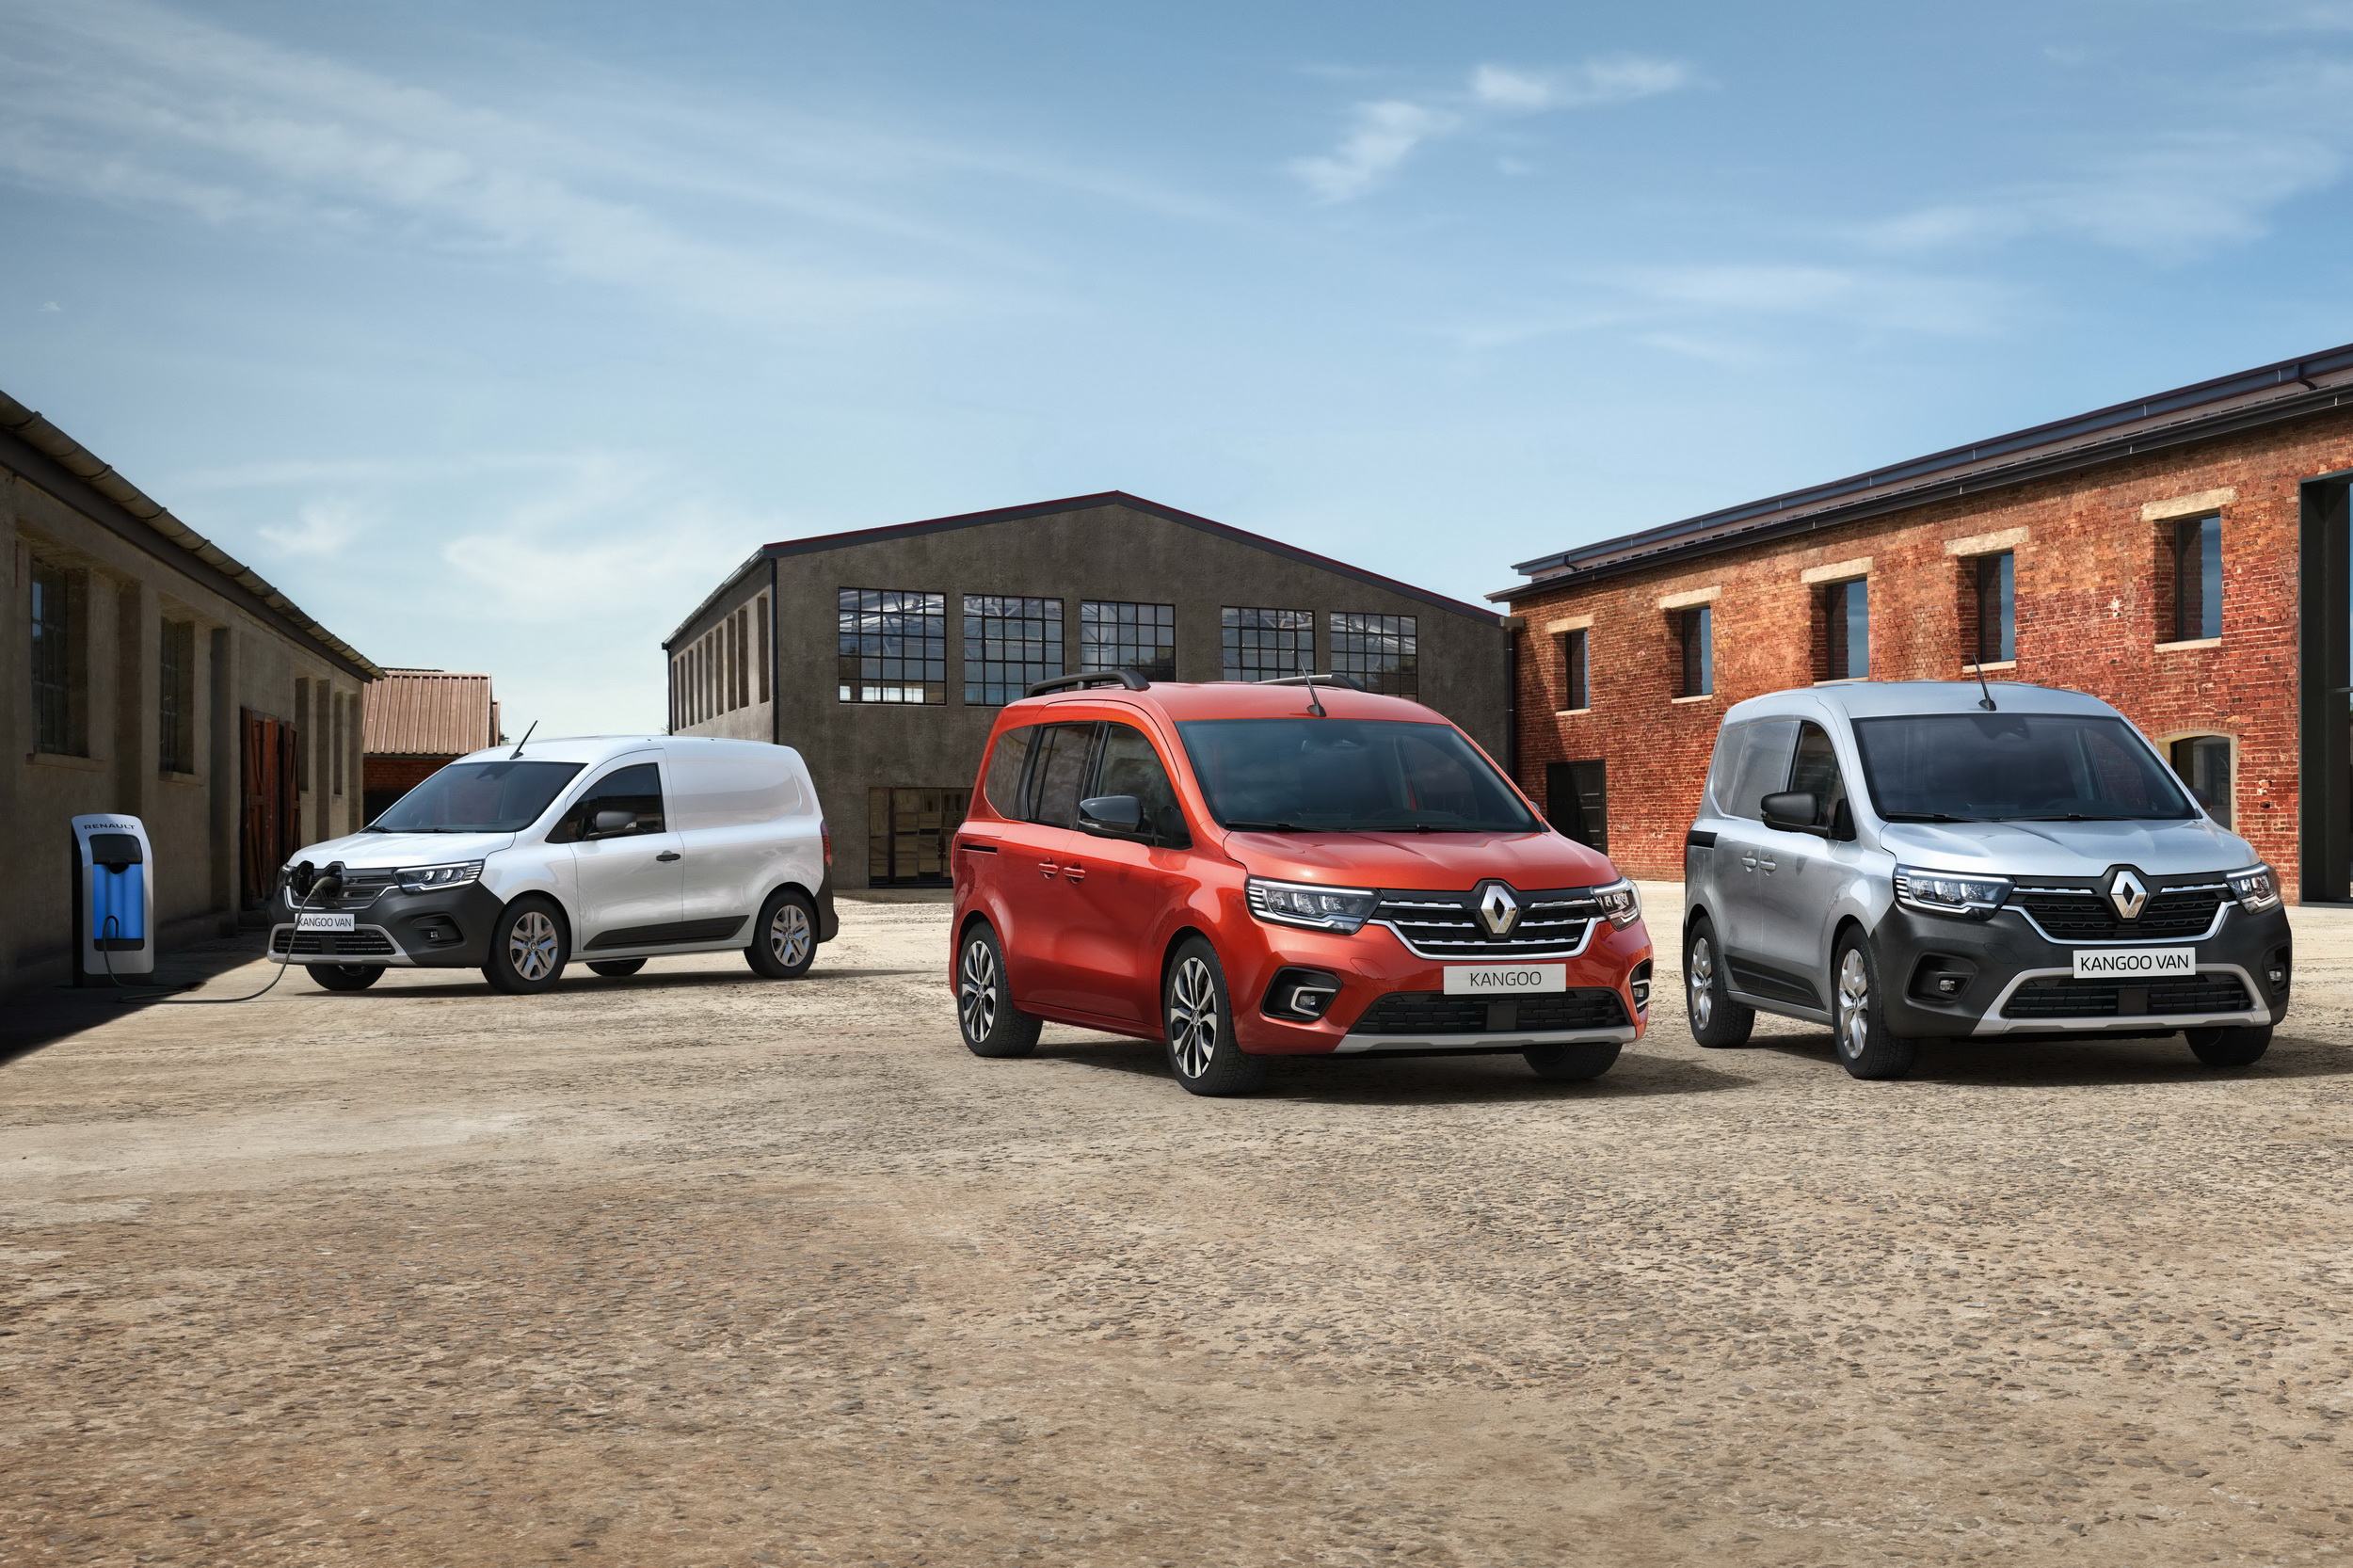 Dacia Dokker vs Renault Kangoo - Blog Vivacar.fr